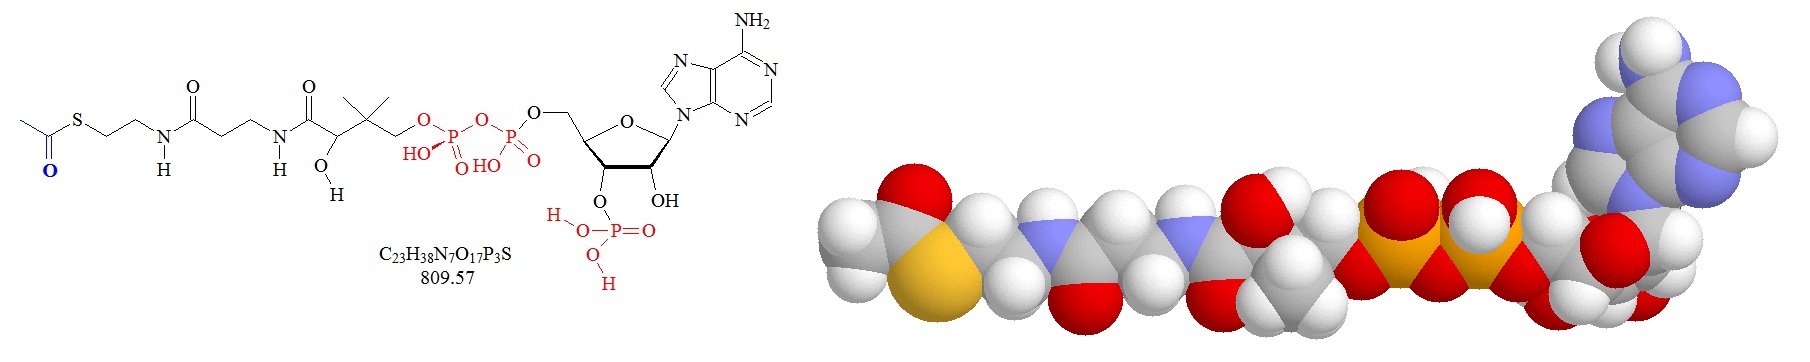 Acetyl-coenzyme A (AcCoA)